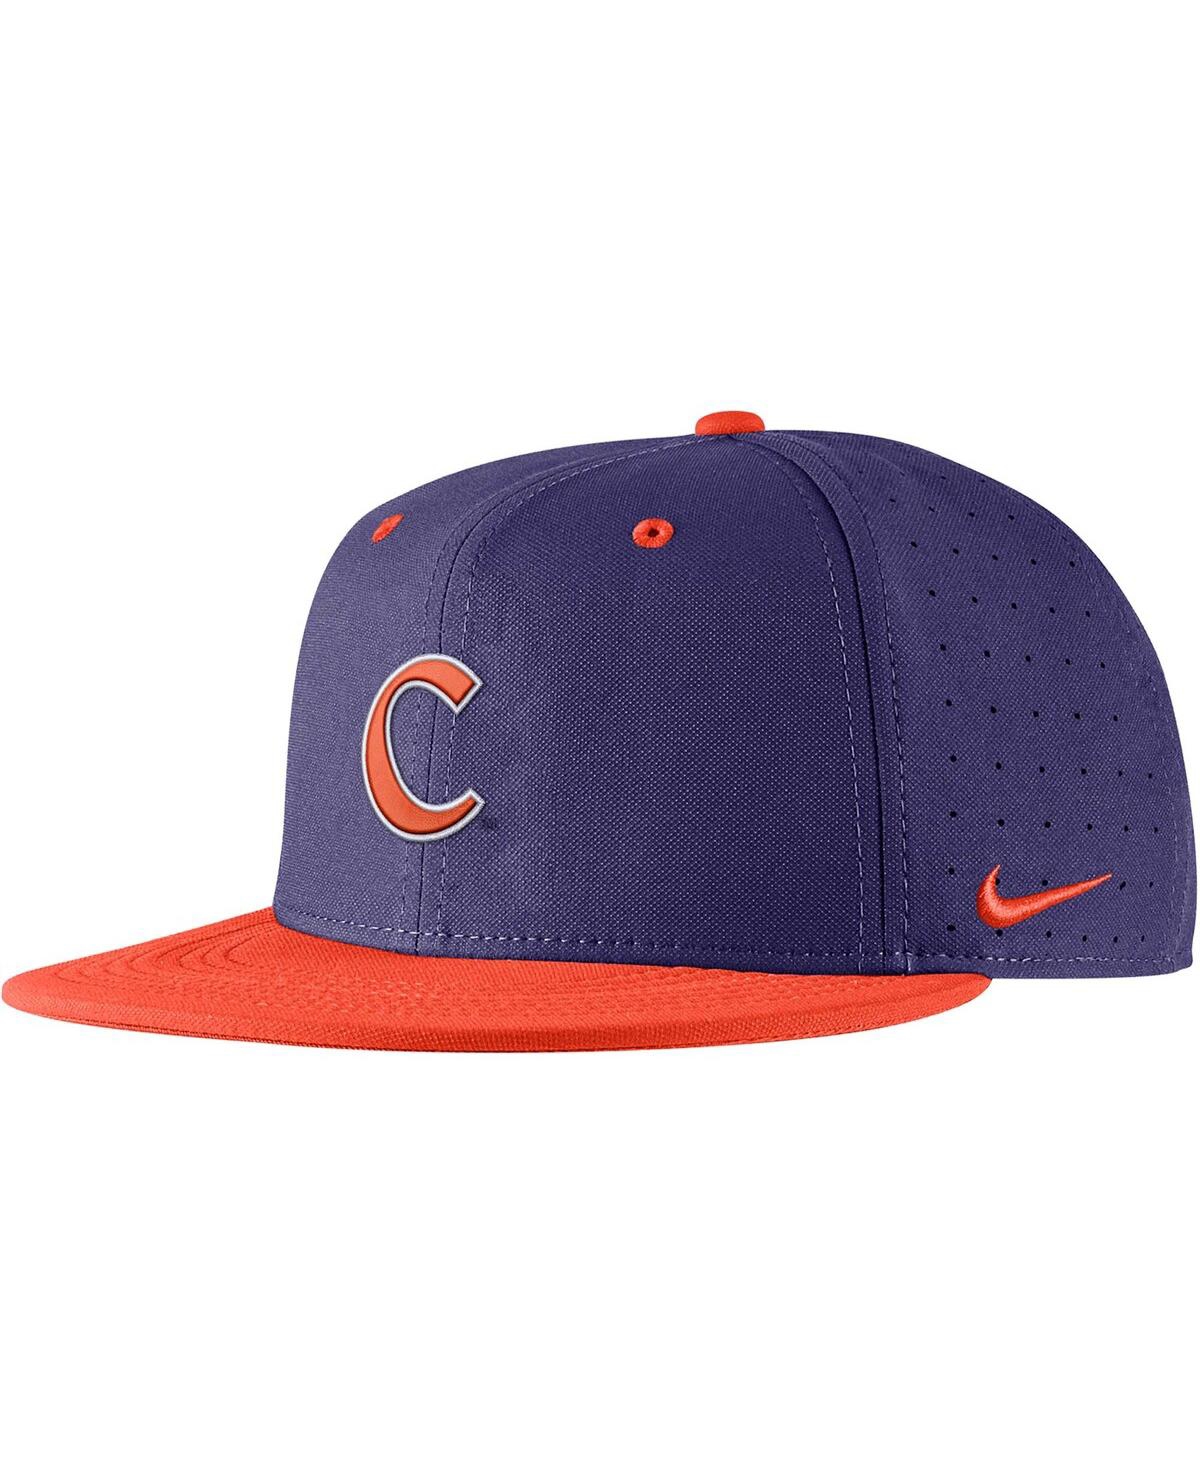 Shop Nike Men's  Purple Clemson Tigers Aero True Baseball Performance Fitted Hat